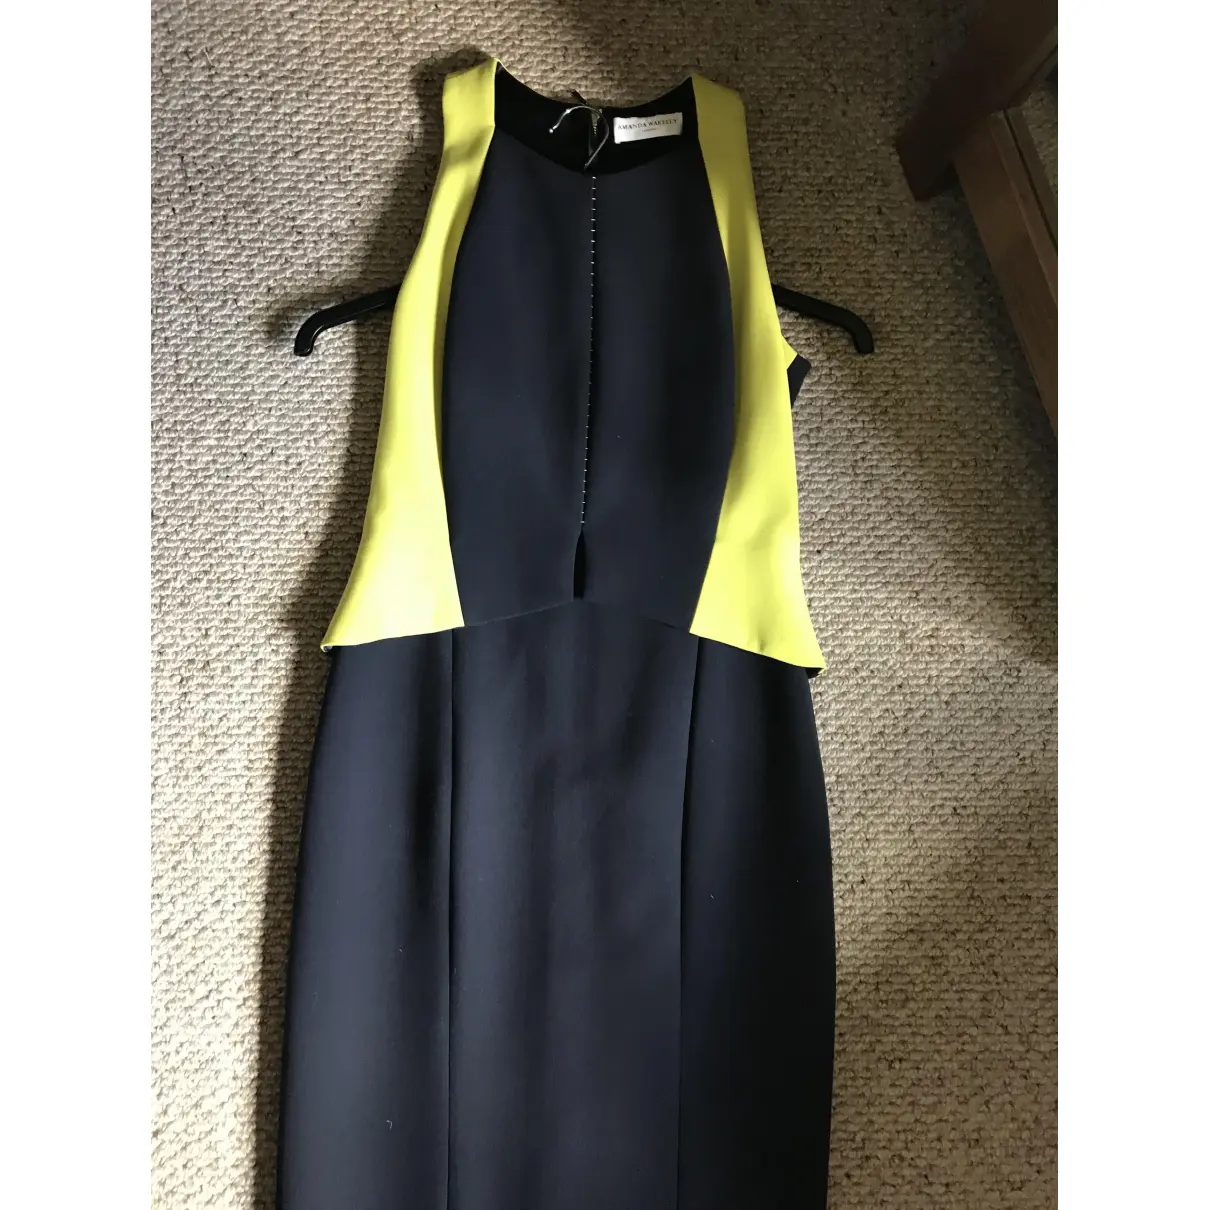 Buy Amanda Wakeley Maxi dress online